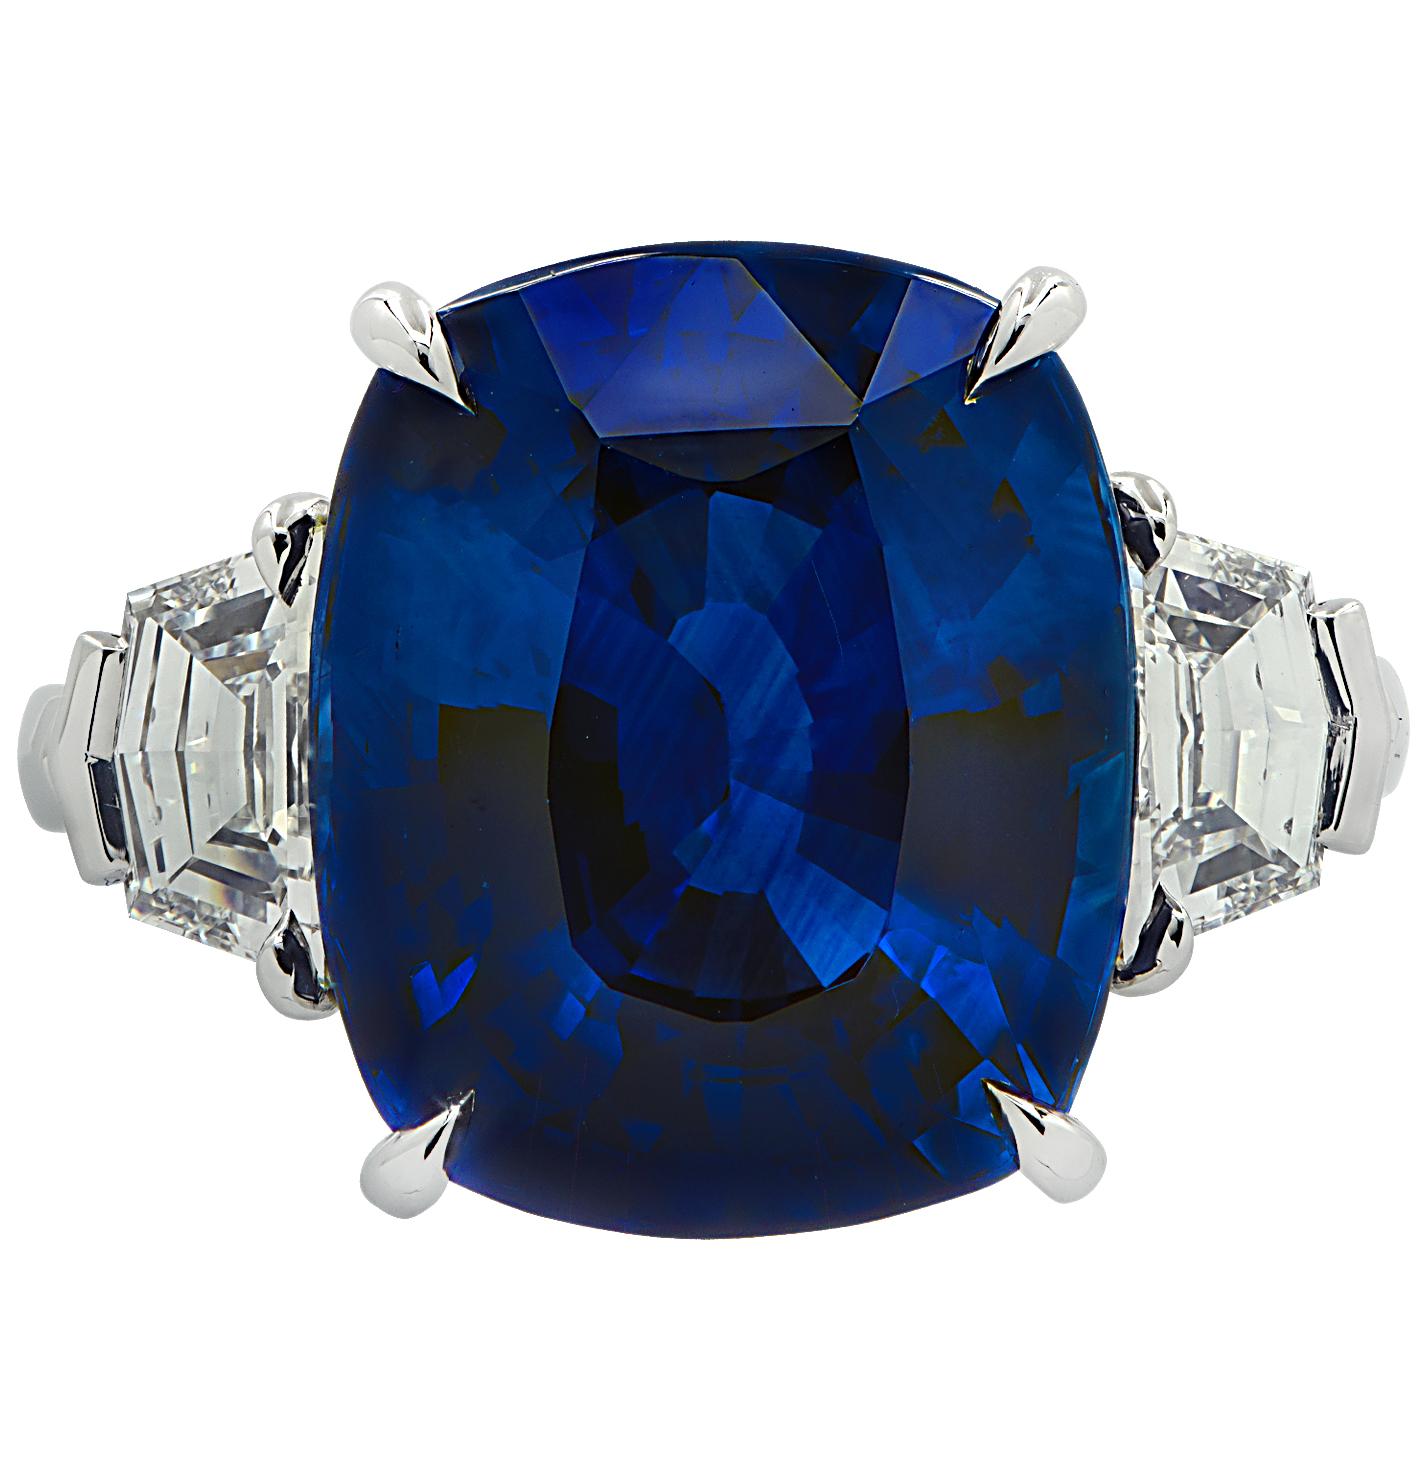 Women's 10.56 Carat Blue Sapphire and Diamond Ring